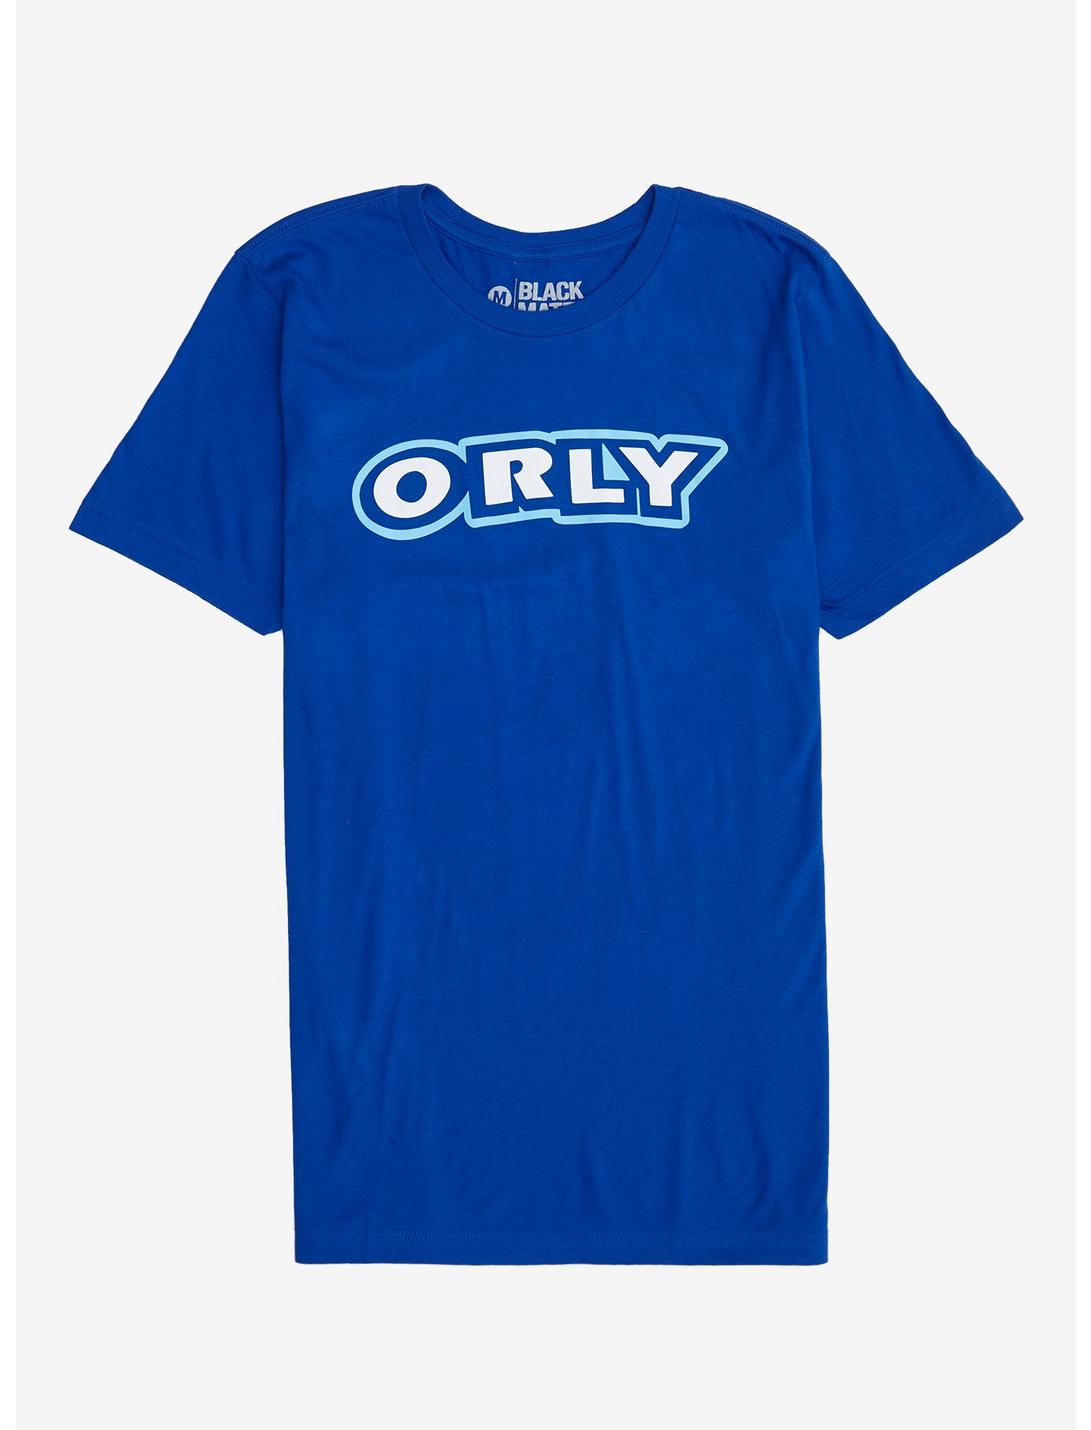 O RLY Blue T-Shirt, BLUE, hi-res